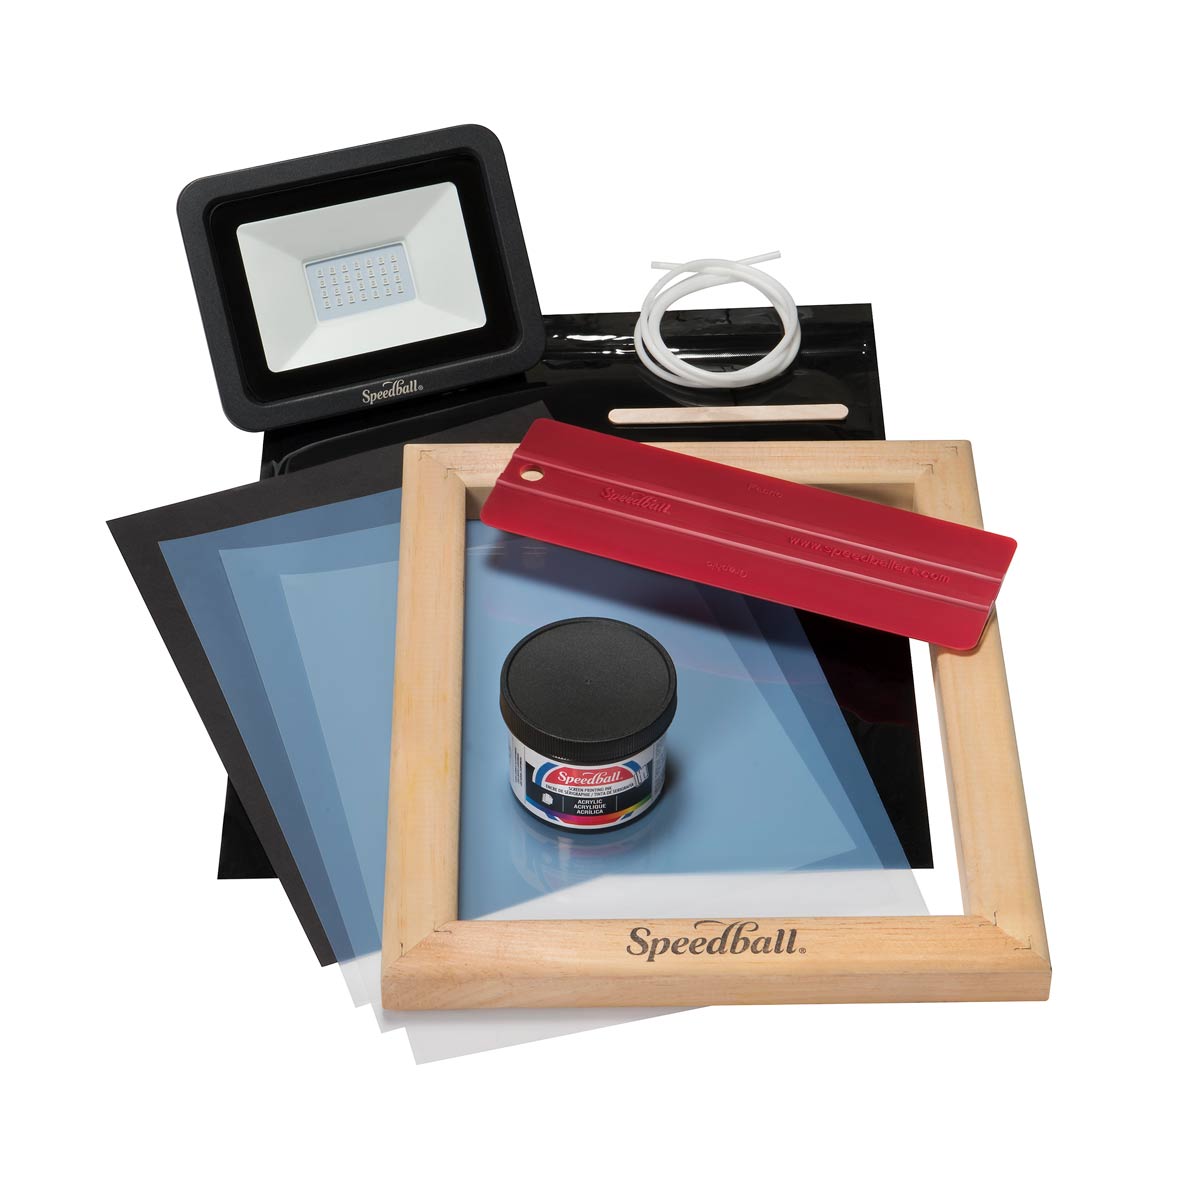 Speedball - Speed Screens Screen Printing Kit